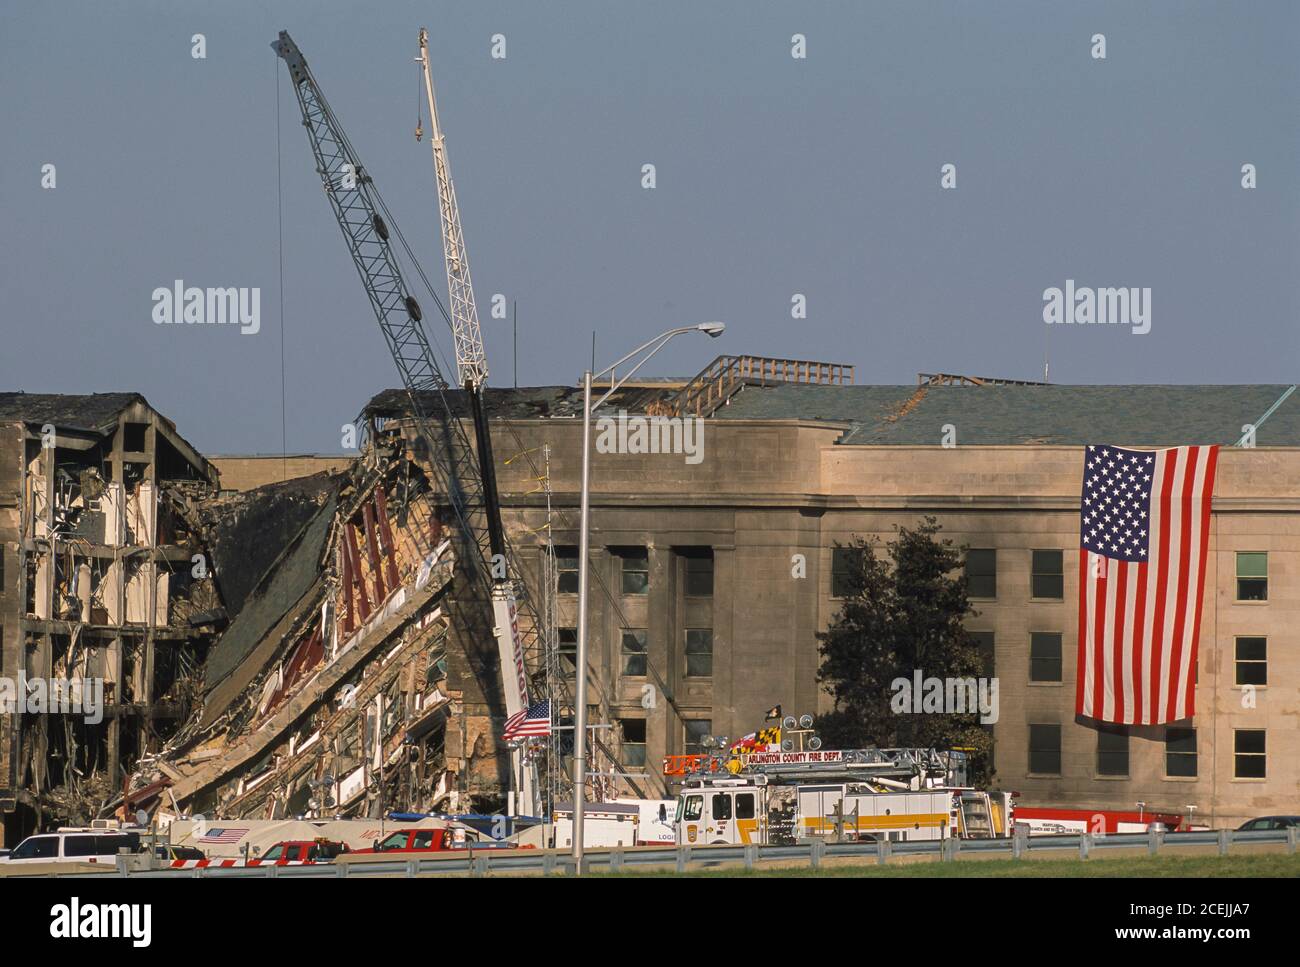 ARLINGTON, VIRGINIA, États-Unis, 11 SEPTEMBRE 2001 - le Pentagone West Side Dash from hijed 757 Jetliner terrorisme crash. Banque D'Images